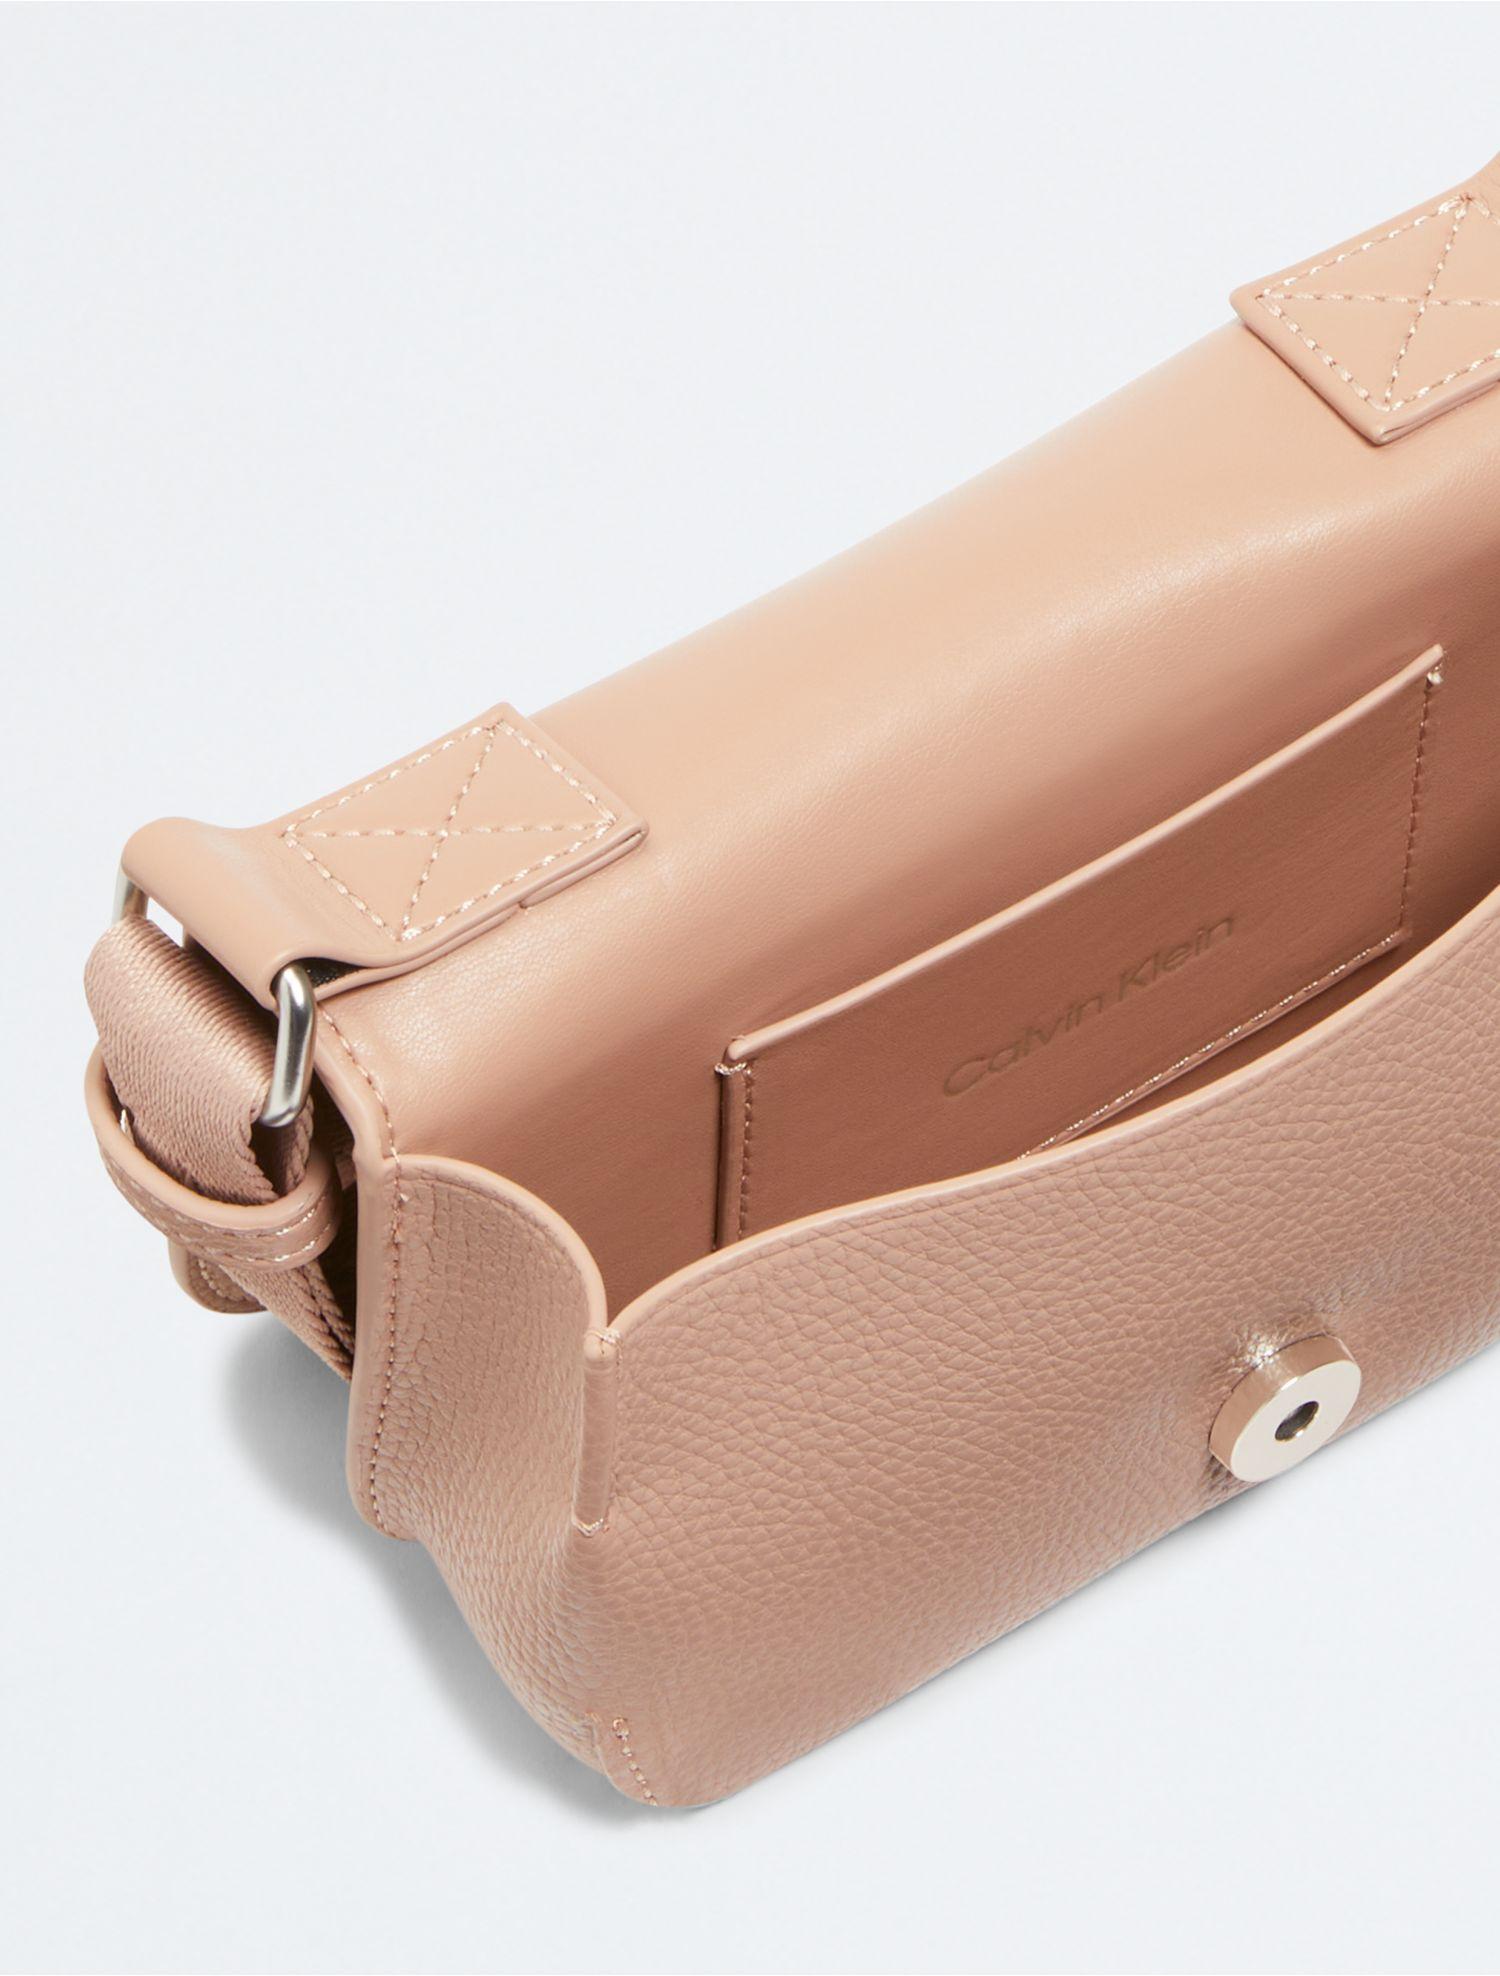 Calvin Klein Handbags - Buy Calvin Klein Handbags online in India